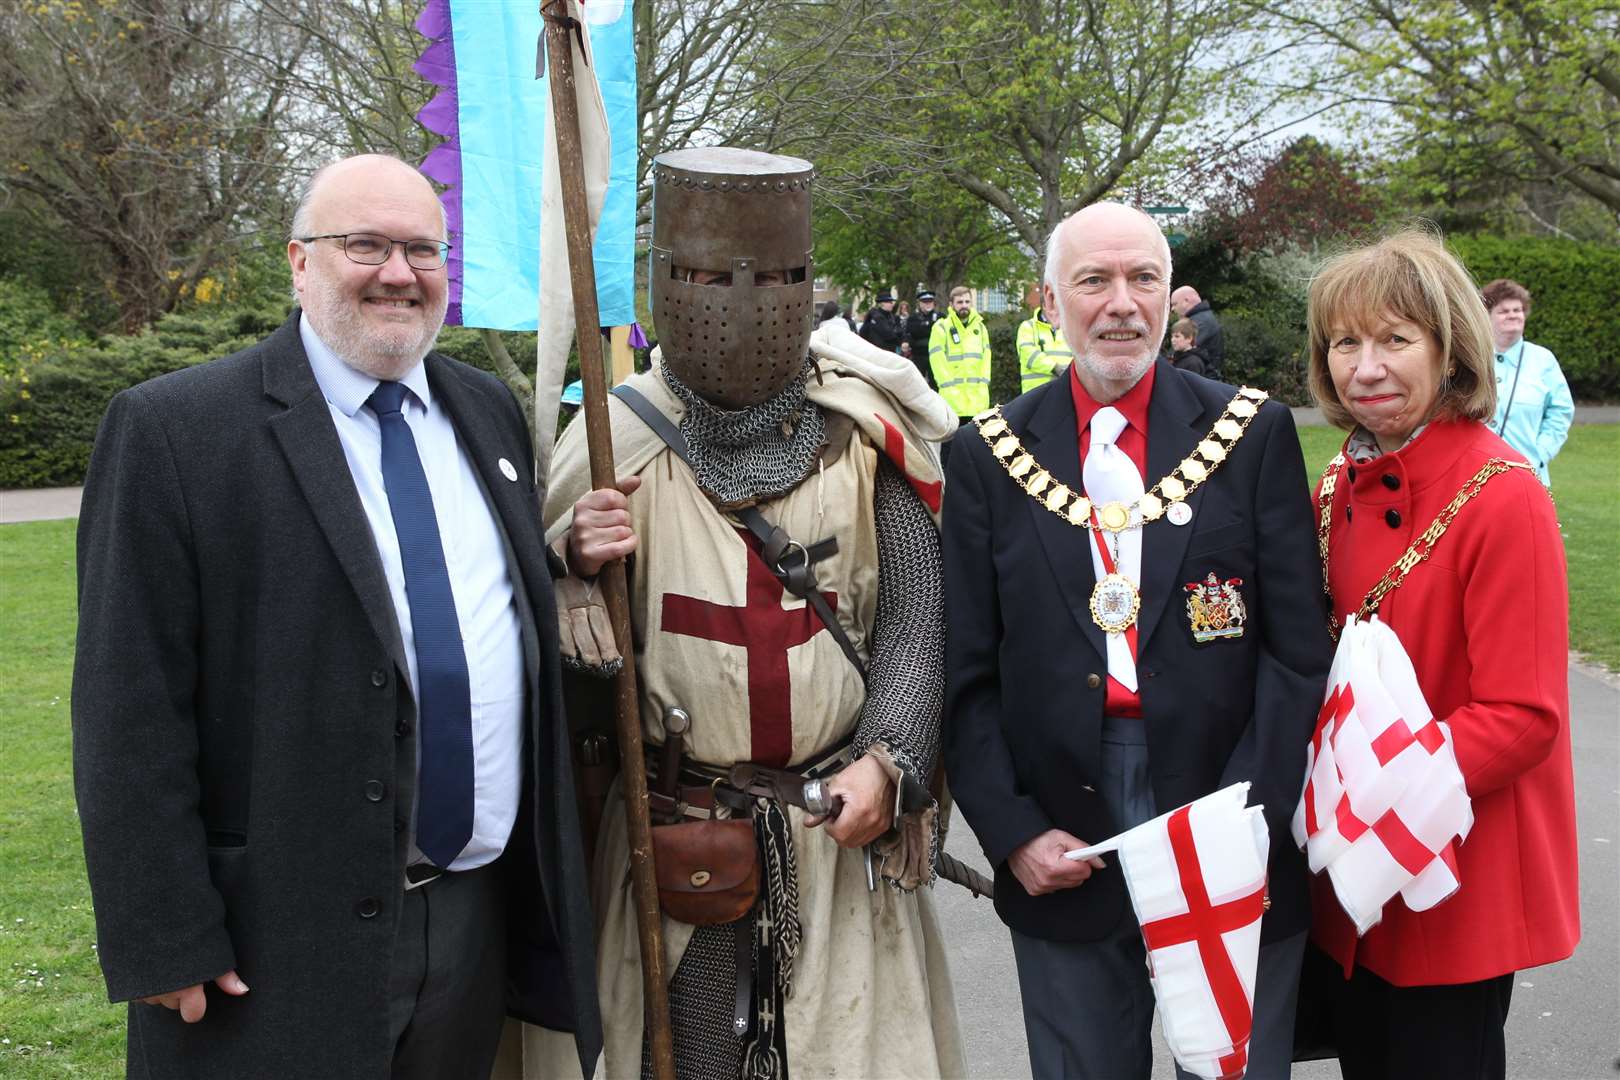 Jeremy Kite, The Leader of Dartford Council, a man dressed as St George, The Mayor of Dartford, Cllr Ian Armitt, the Mayoress Lynne Armitt.